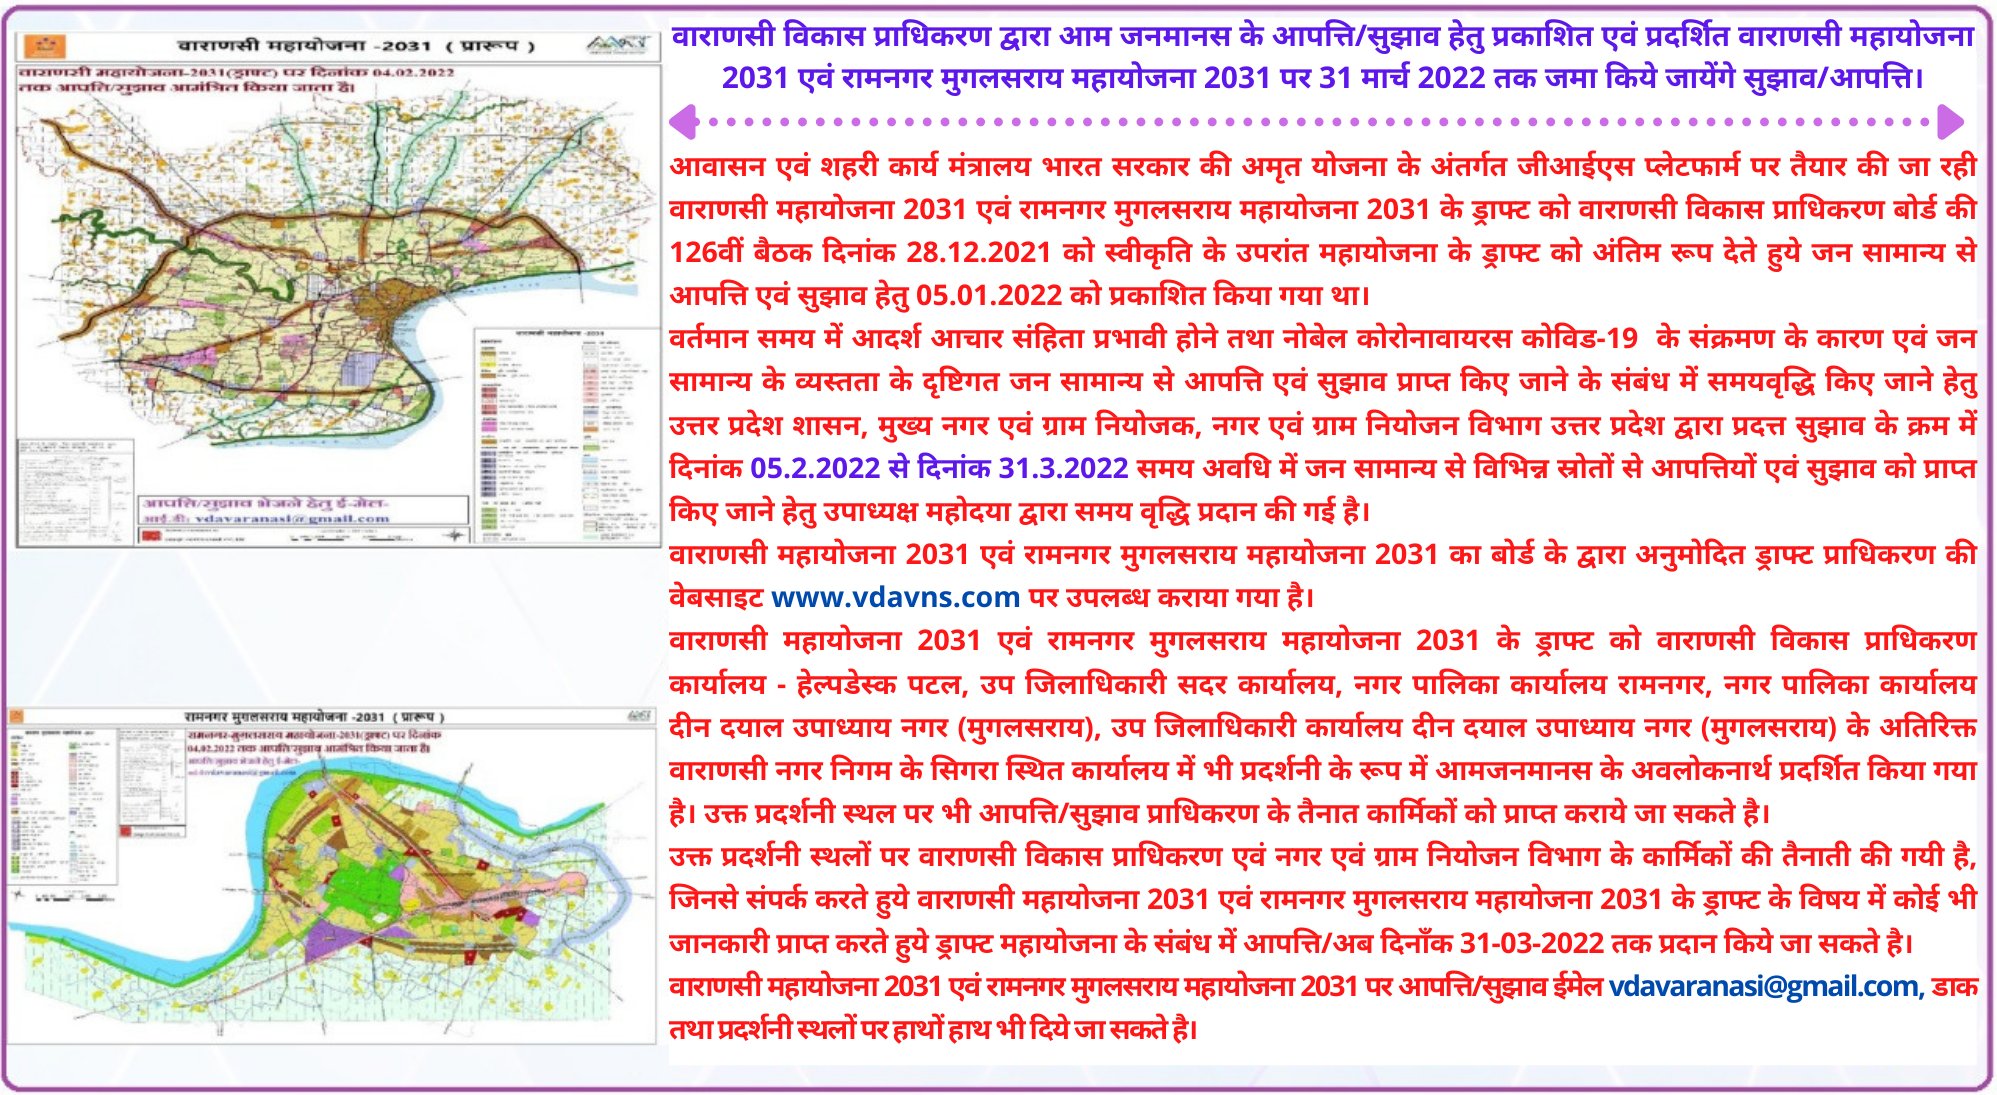 Development Vision of Varanasi